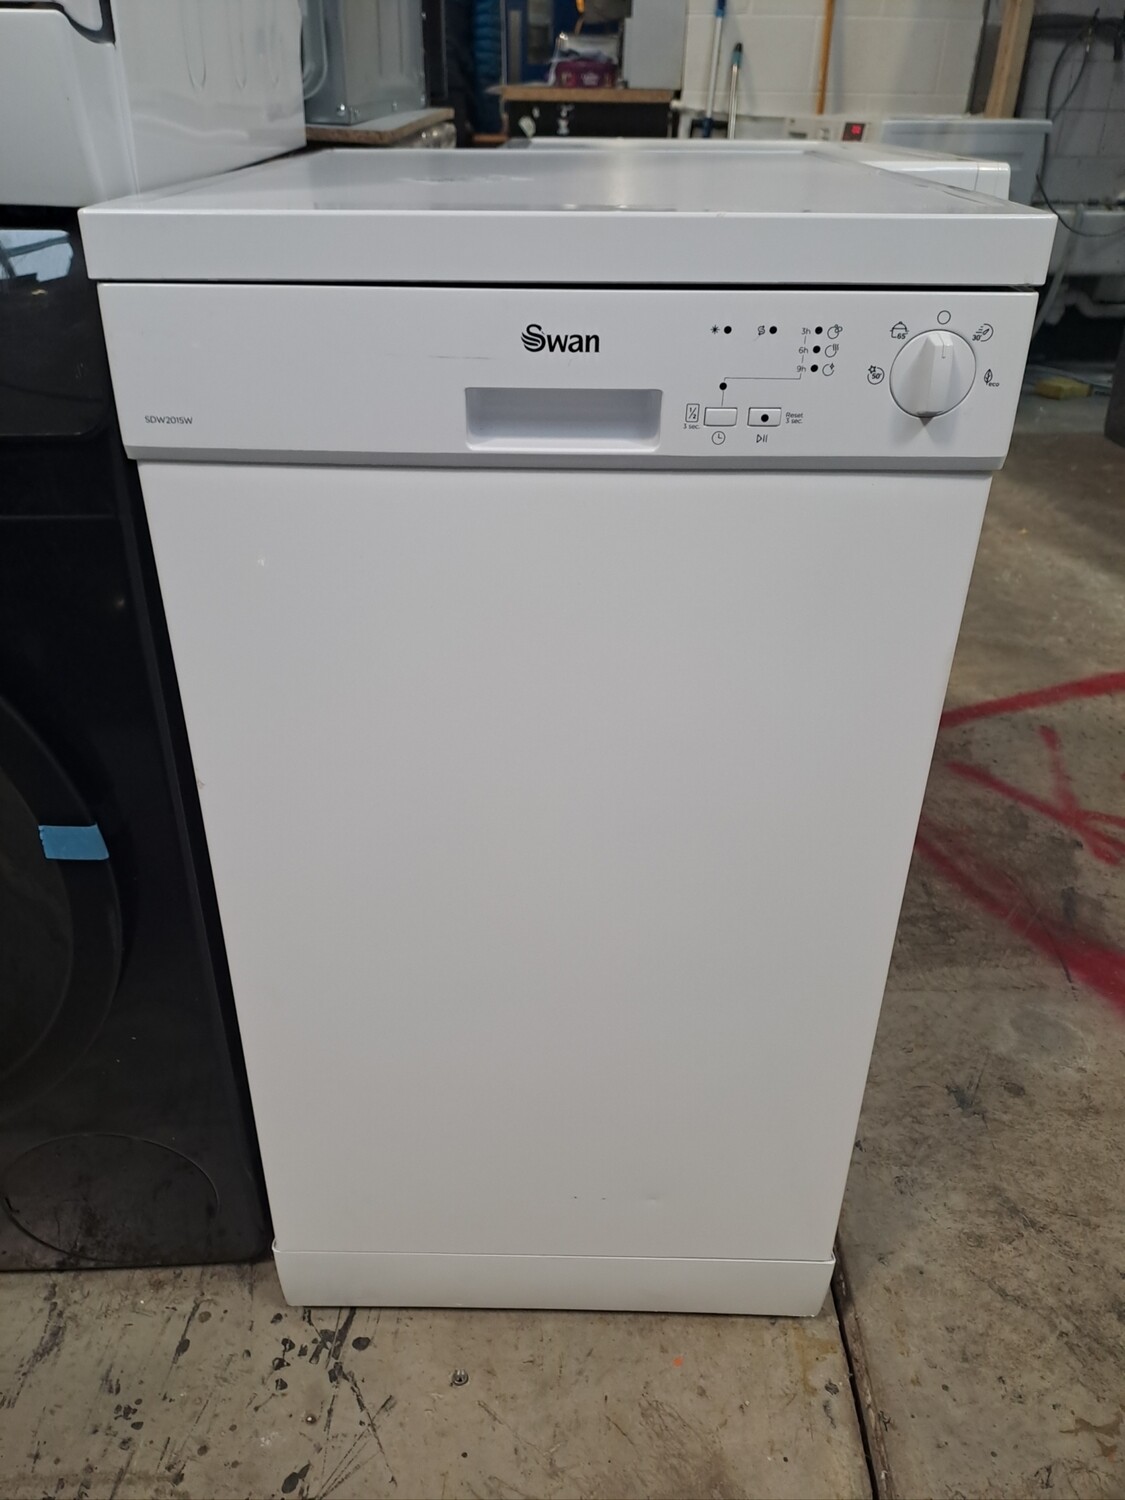 Swan SDW2015W 45cm Freestanding Slimline Dishwasher in White New Graded